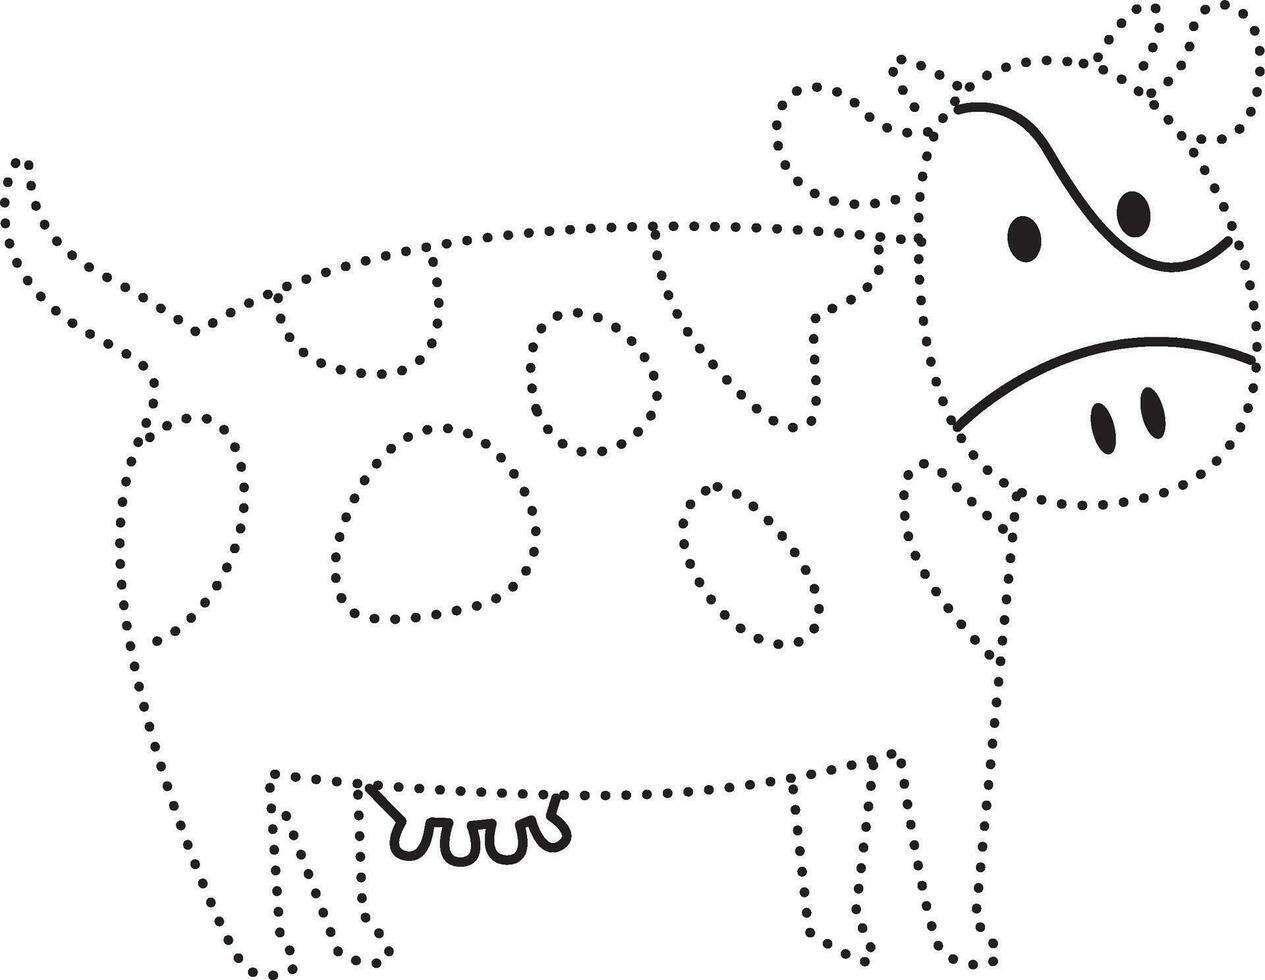 koe dier stippel lijn praktijk trek tekenfilm tekening kawaii anime kleur bladzijde schattig illustratie tekening klem kunst karakter chibi manga grappig vector